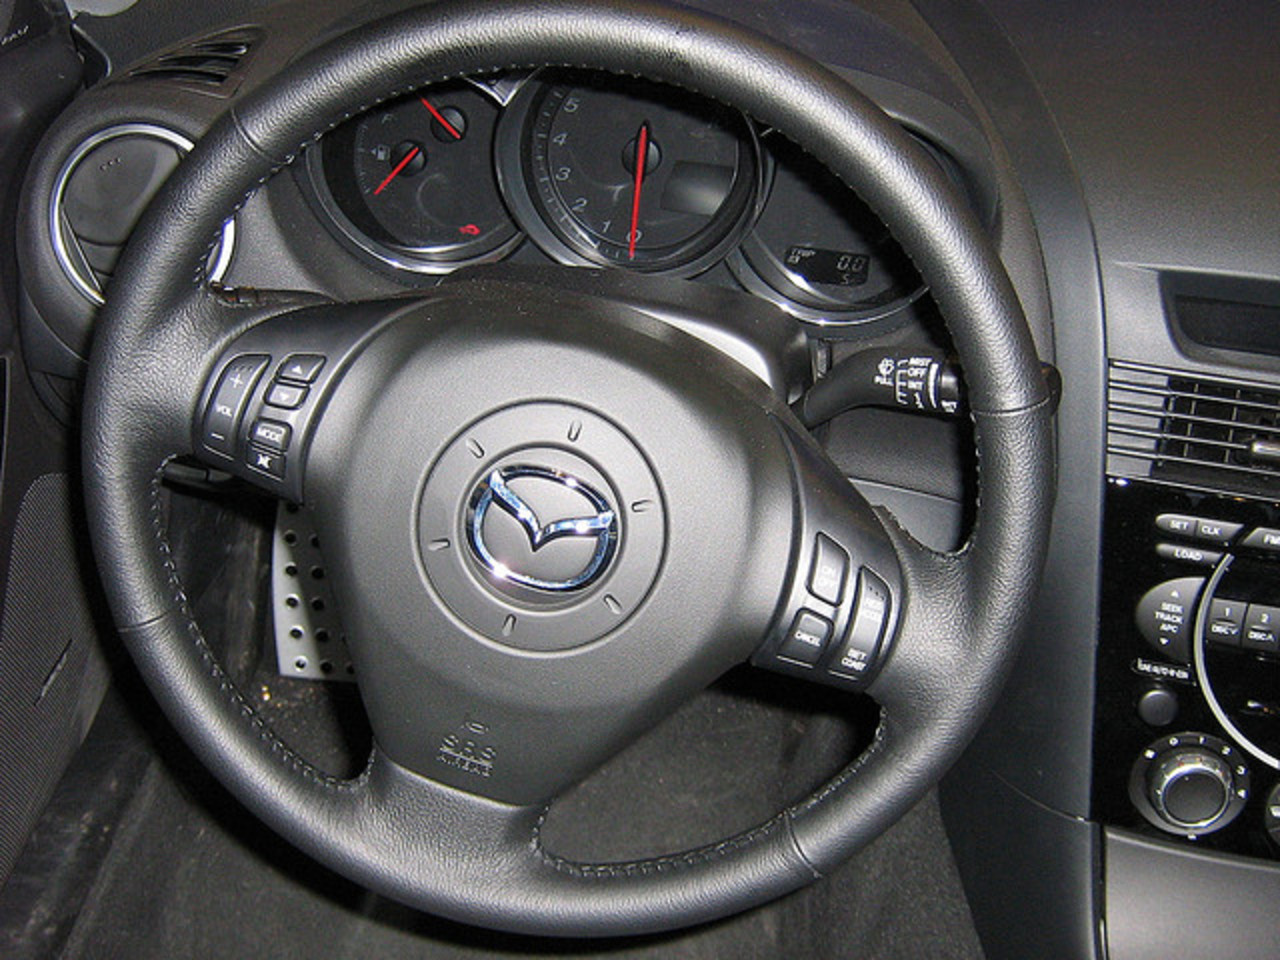 Salon del Automovil // Mazda RX-5 | Flickr - Photo Sharing!